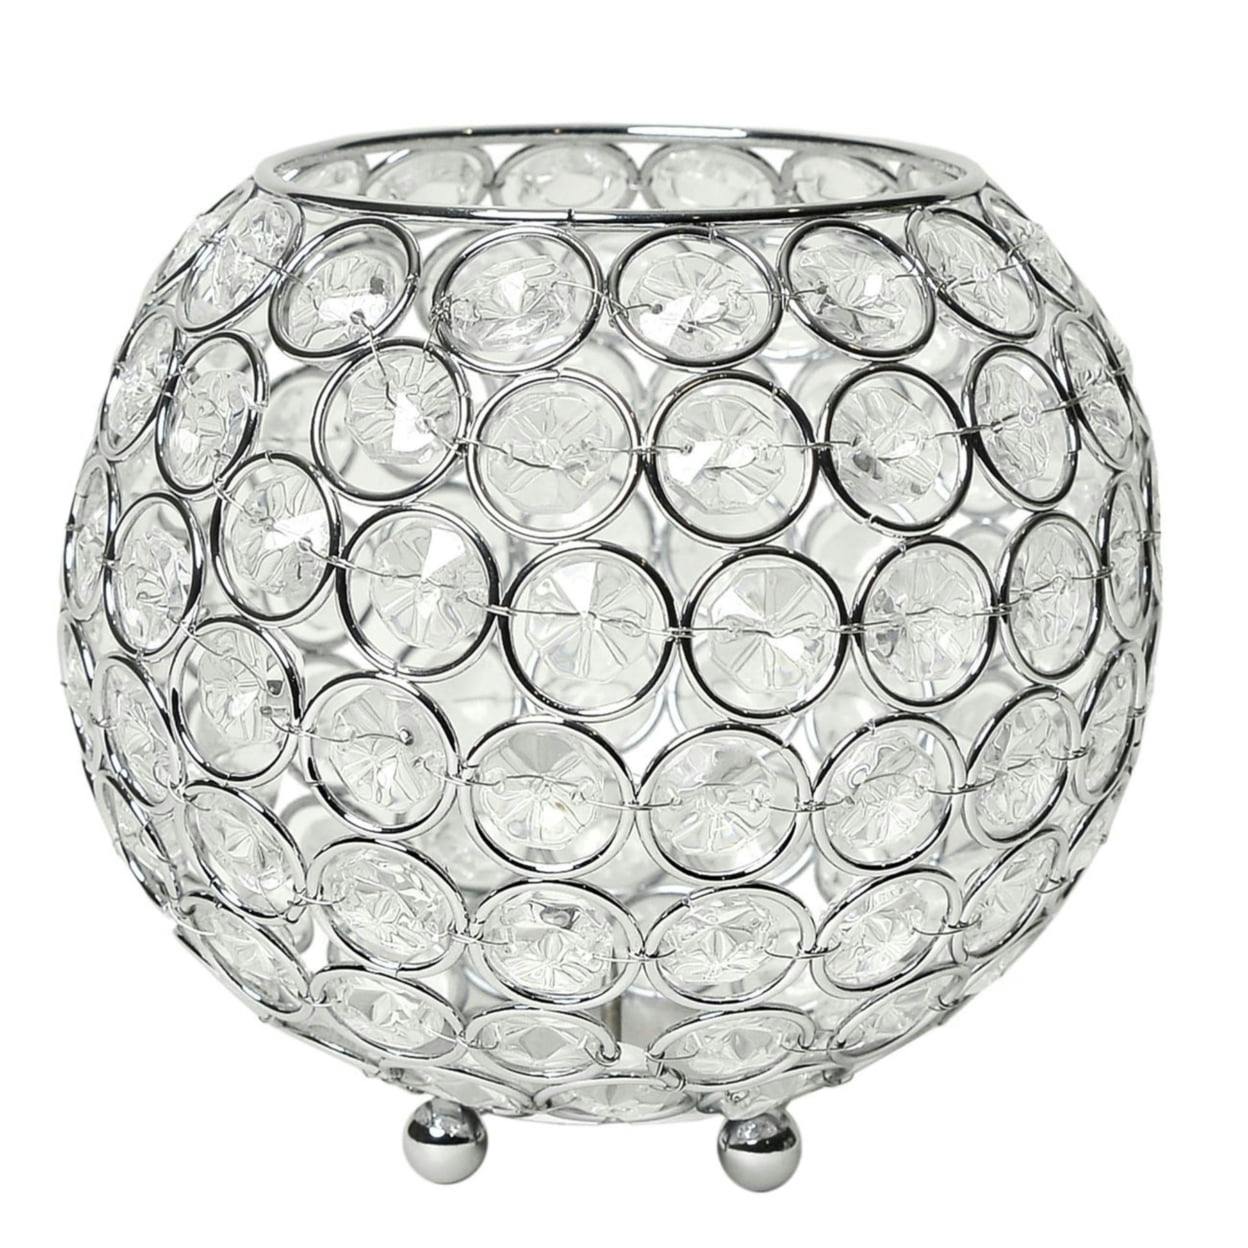 Elipse Sparkling Crystal 6" Tabletop Bowl with Chrome Base